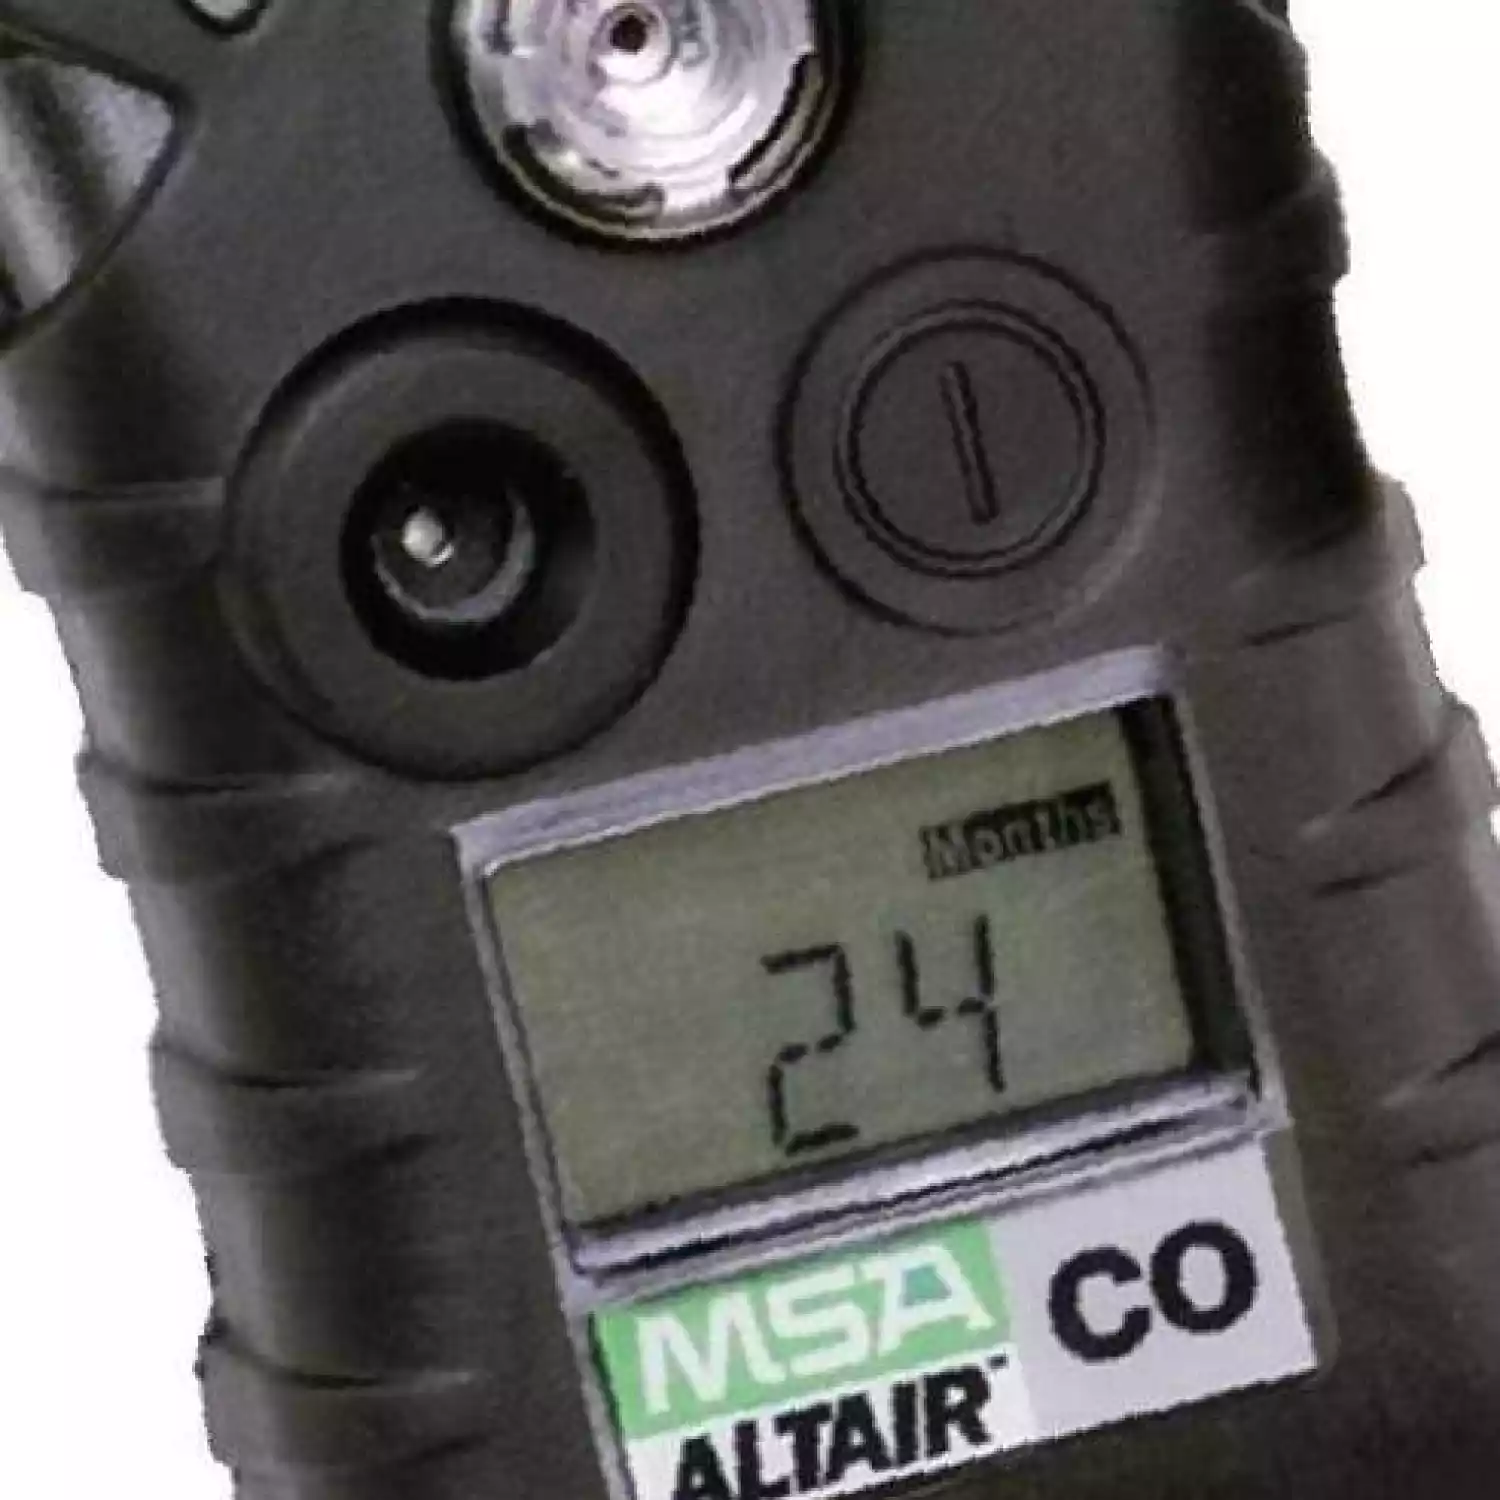 ALTAIR H2S cигнализатор, пороги тревог: 7 ppm и 14 ppm (равно 10 и 20 мг/м3) - 3